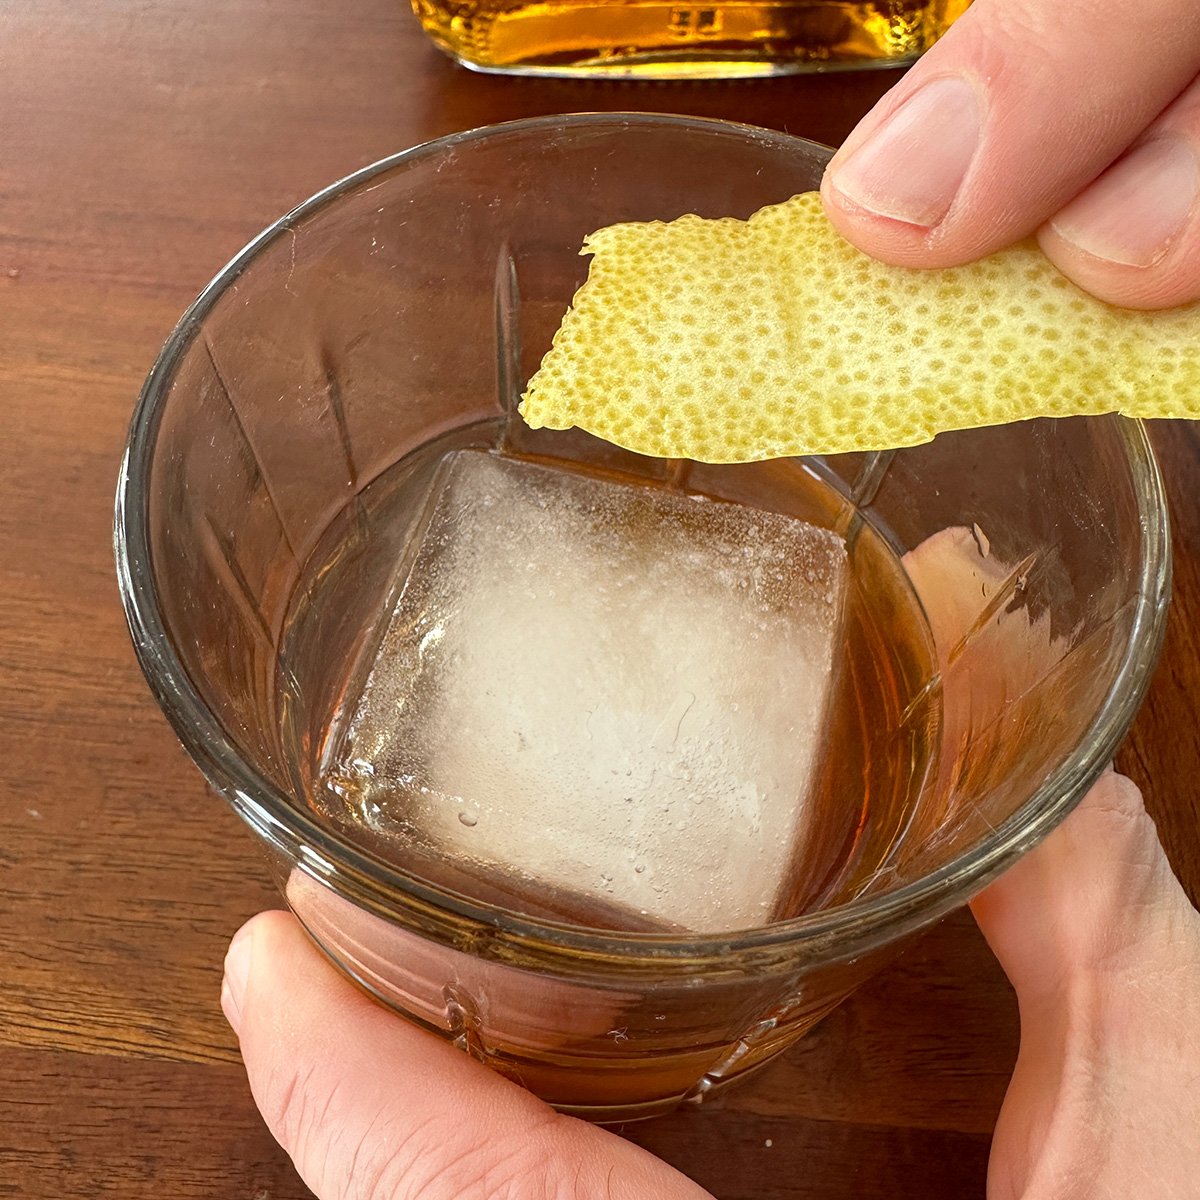 Rubbing a lemon peel on an edge of a glass.